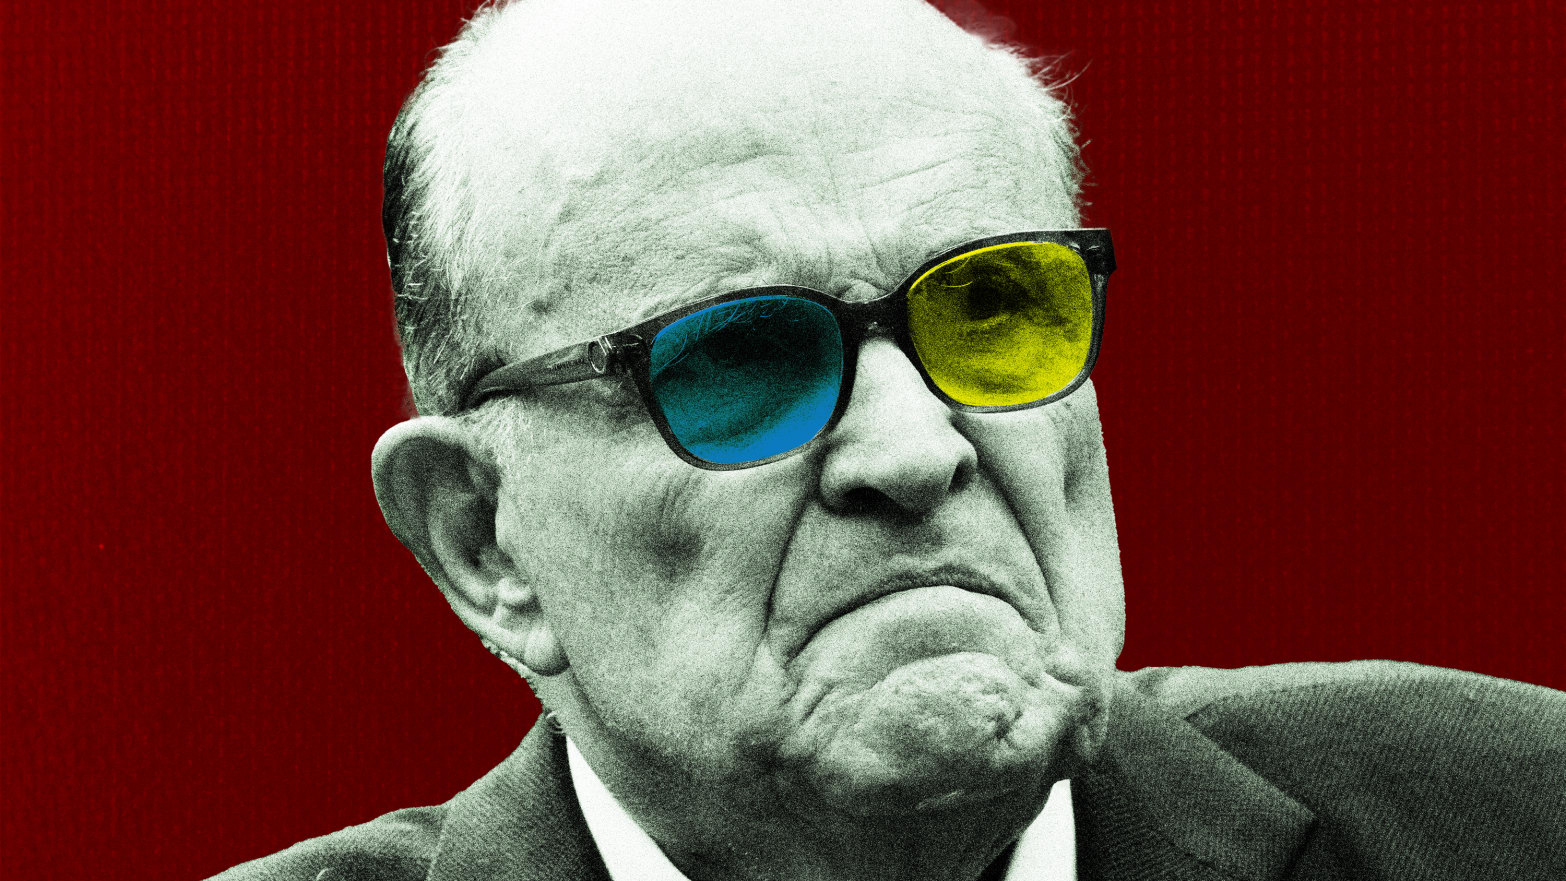 A photo illustration of Rudy Giuliani with Ukraine colored glasses.